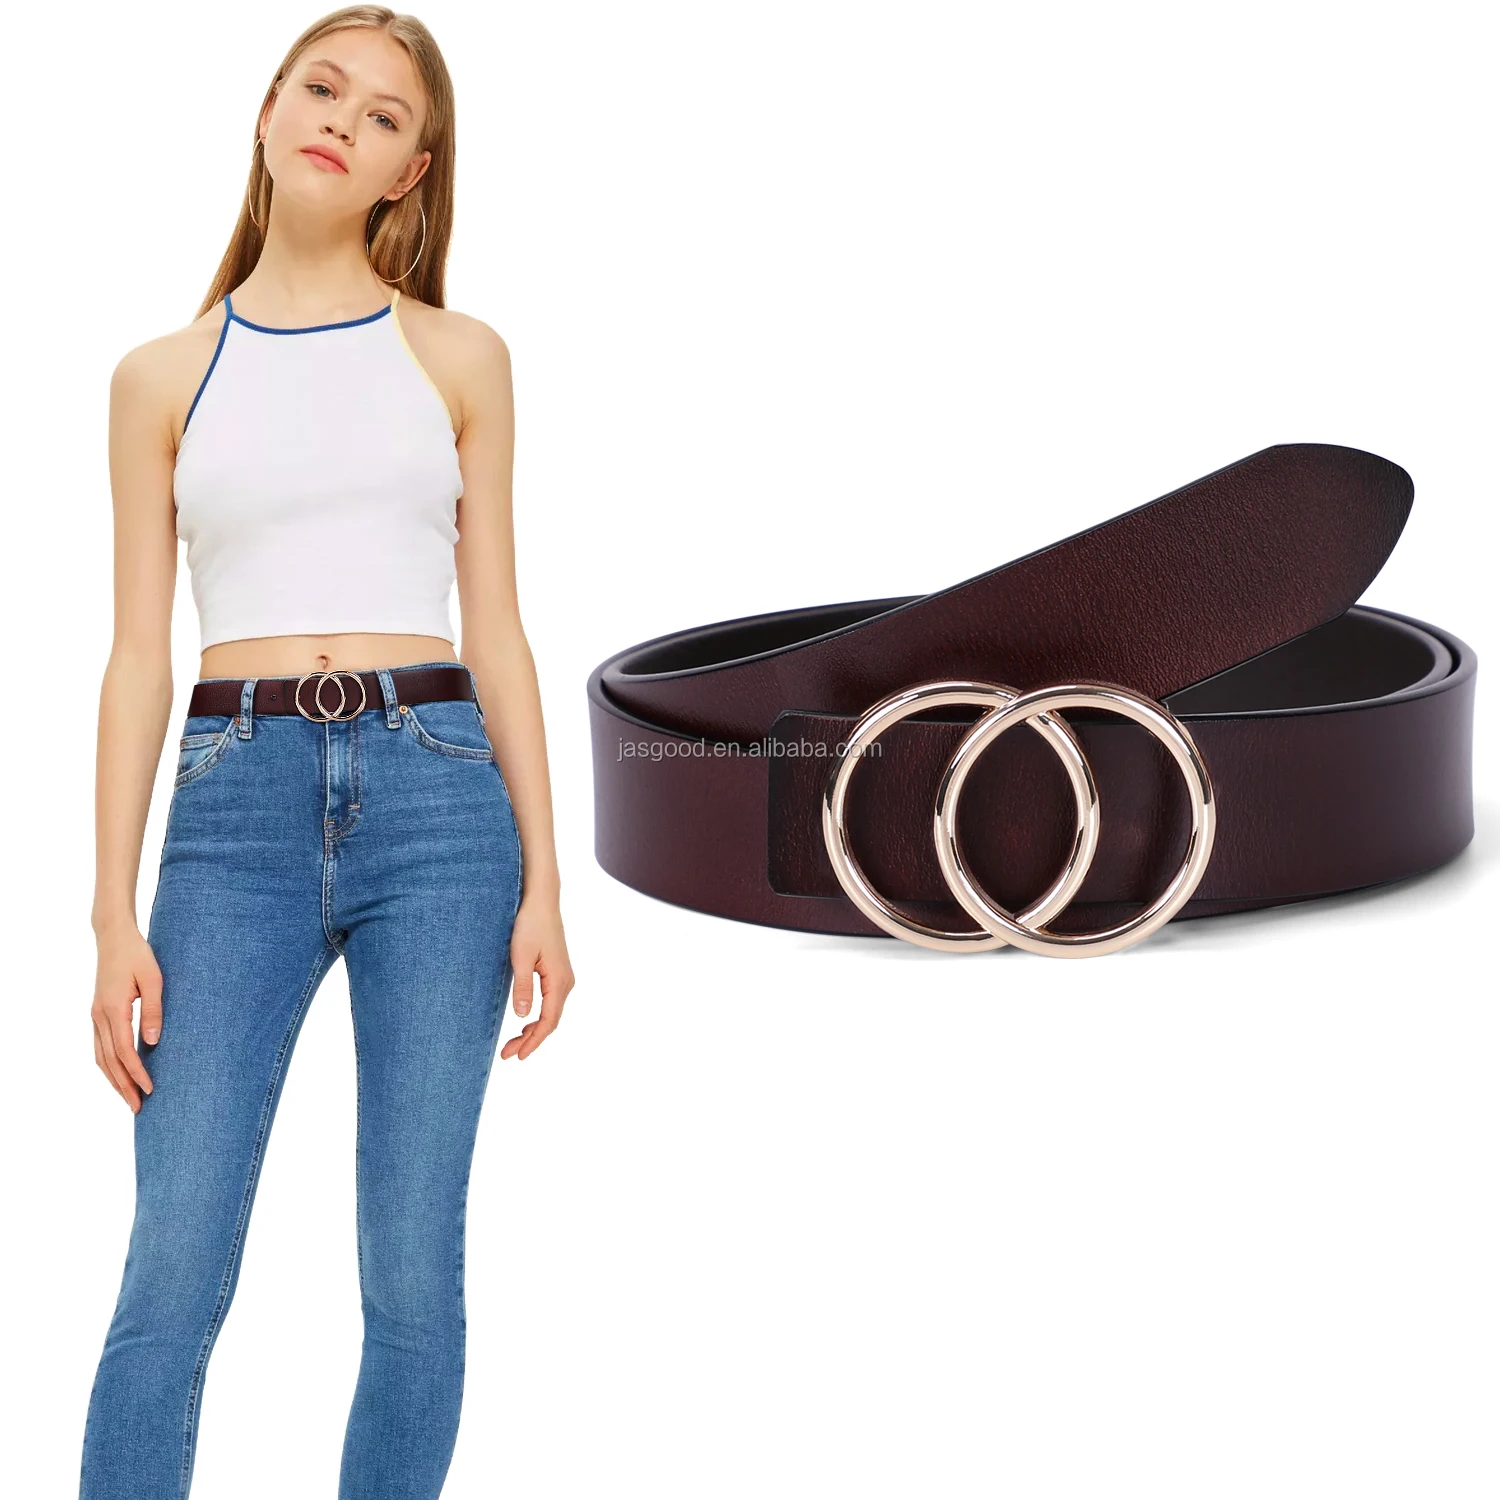 JASGOOD Fashion Women Genuine Leather Belt Western Design for Pants Jeans Dress 